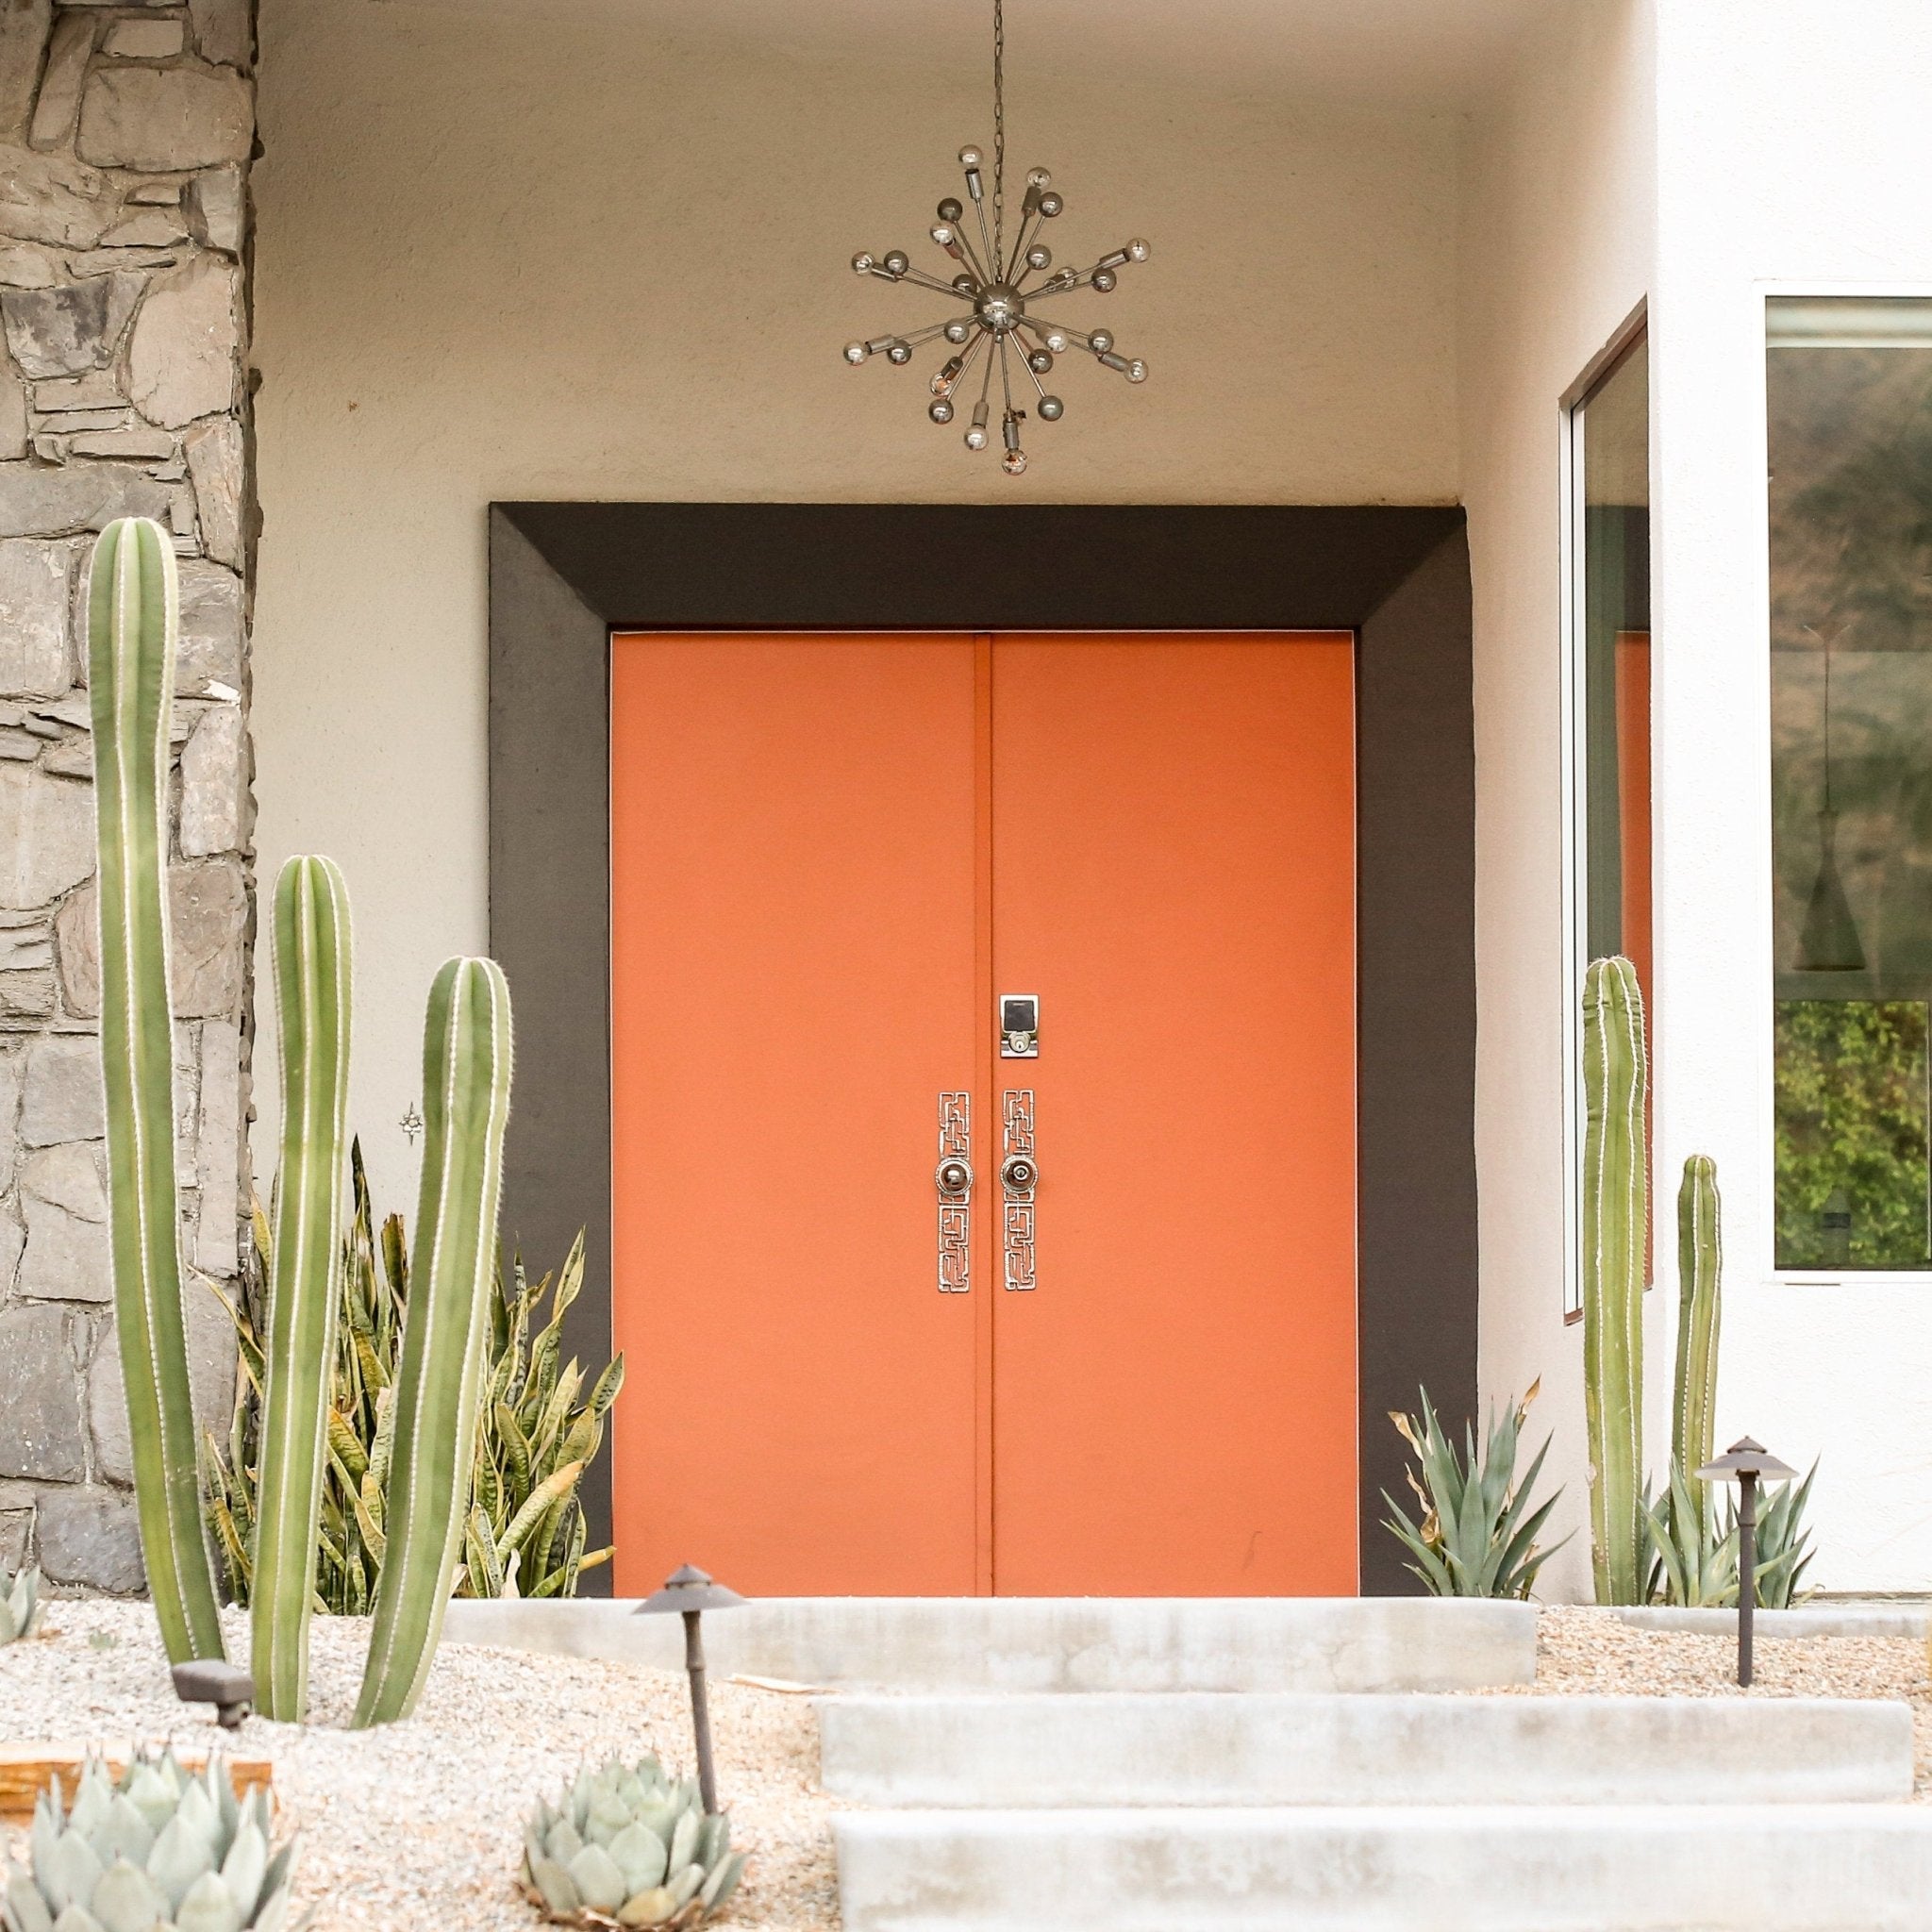 Doors of Palm Springs Photograph by Kelly Segré - Orange Doors with Cactus - Destination PSP